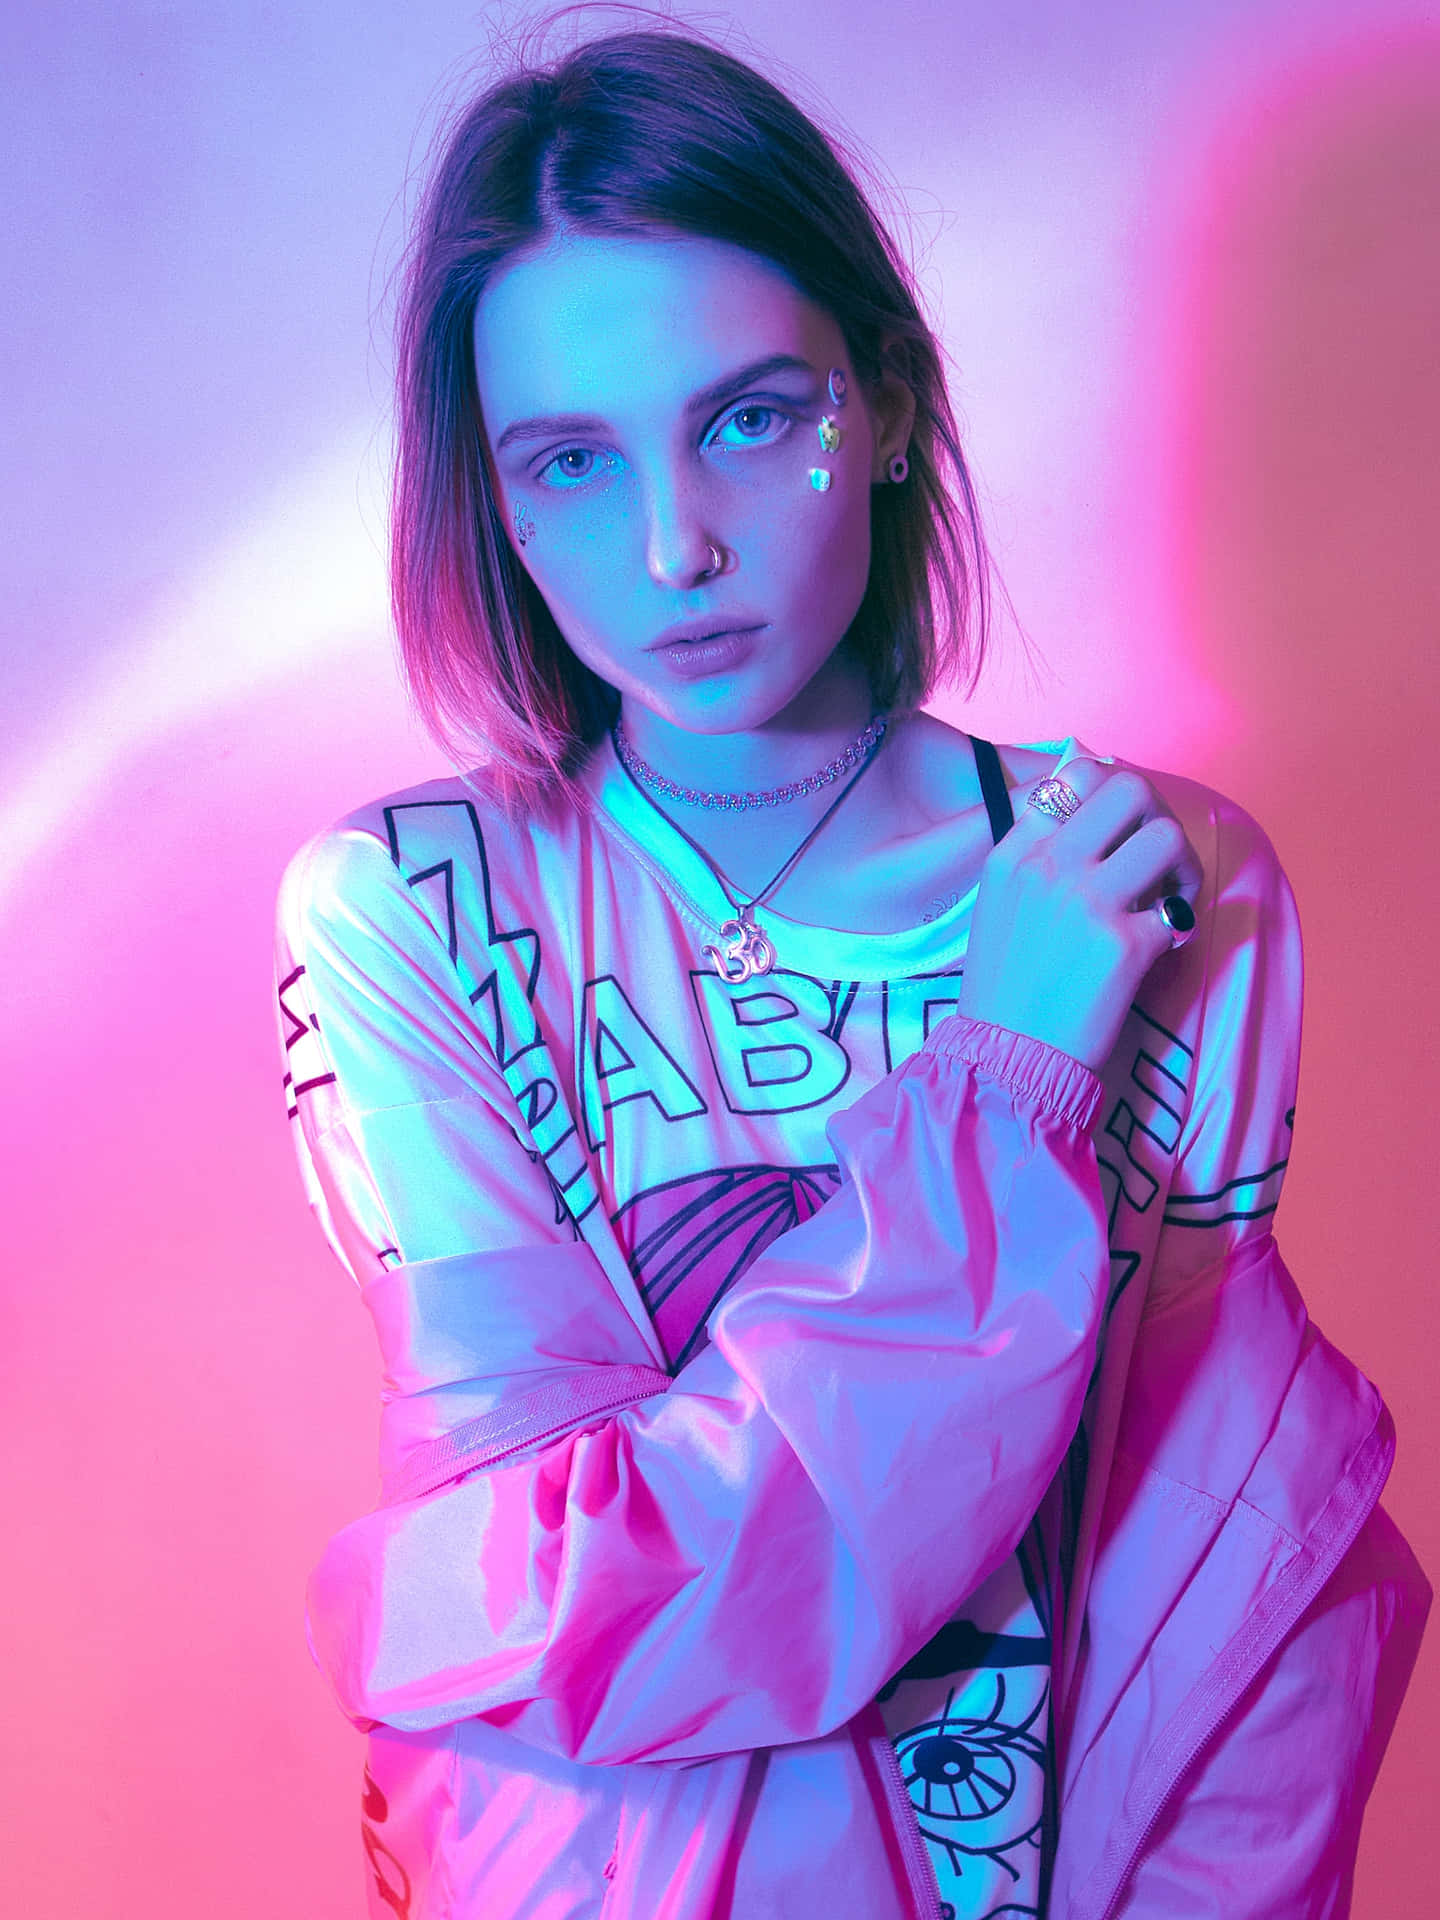 Download Urban Girl In Neon Fashion Wallpaper | Wallpapers.com